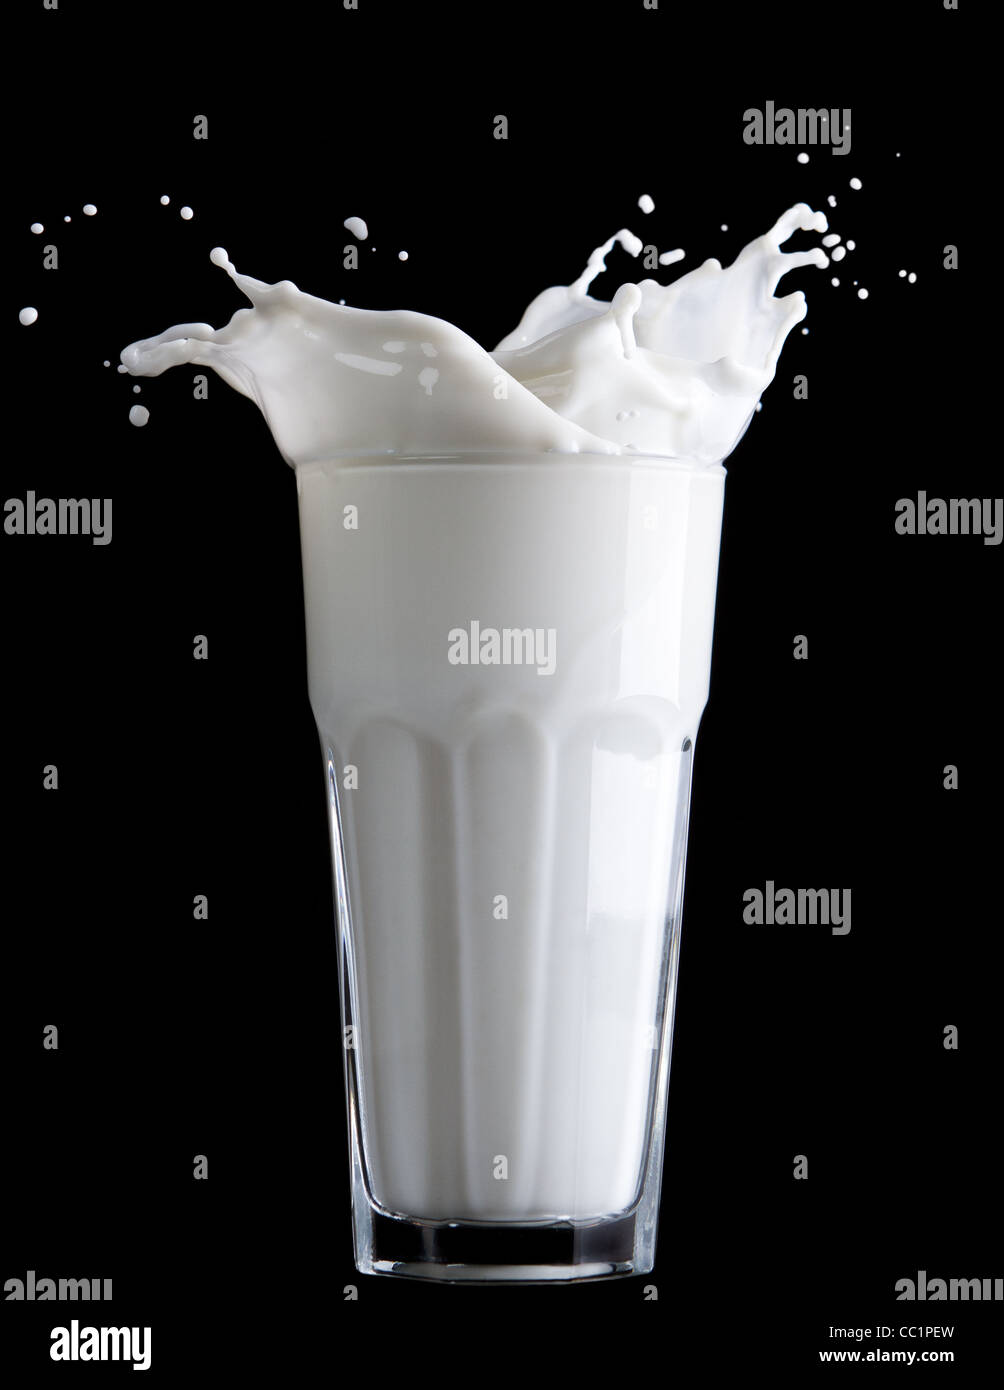 milk glass and milk splash on black background Stock Photo